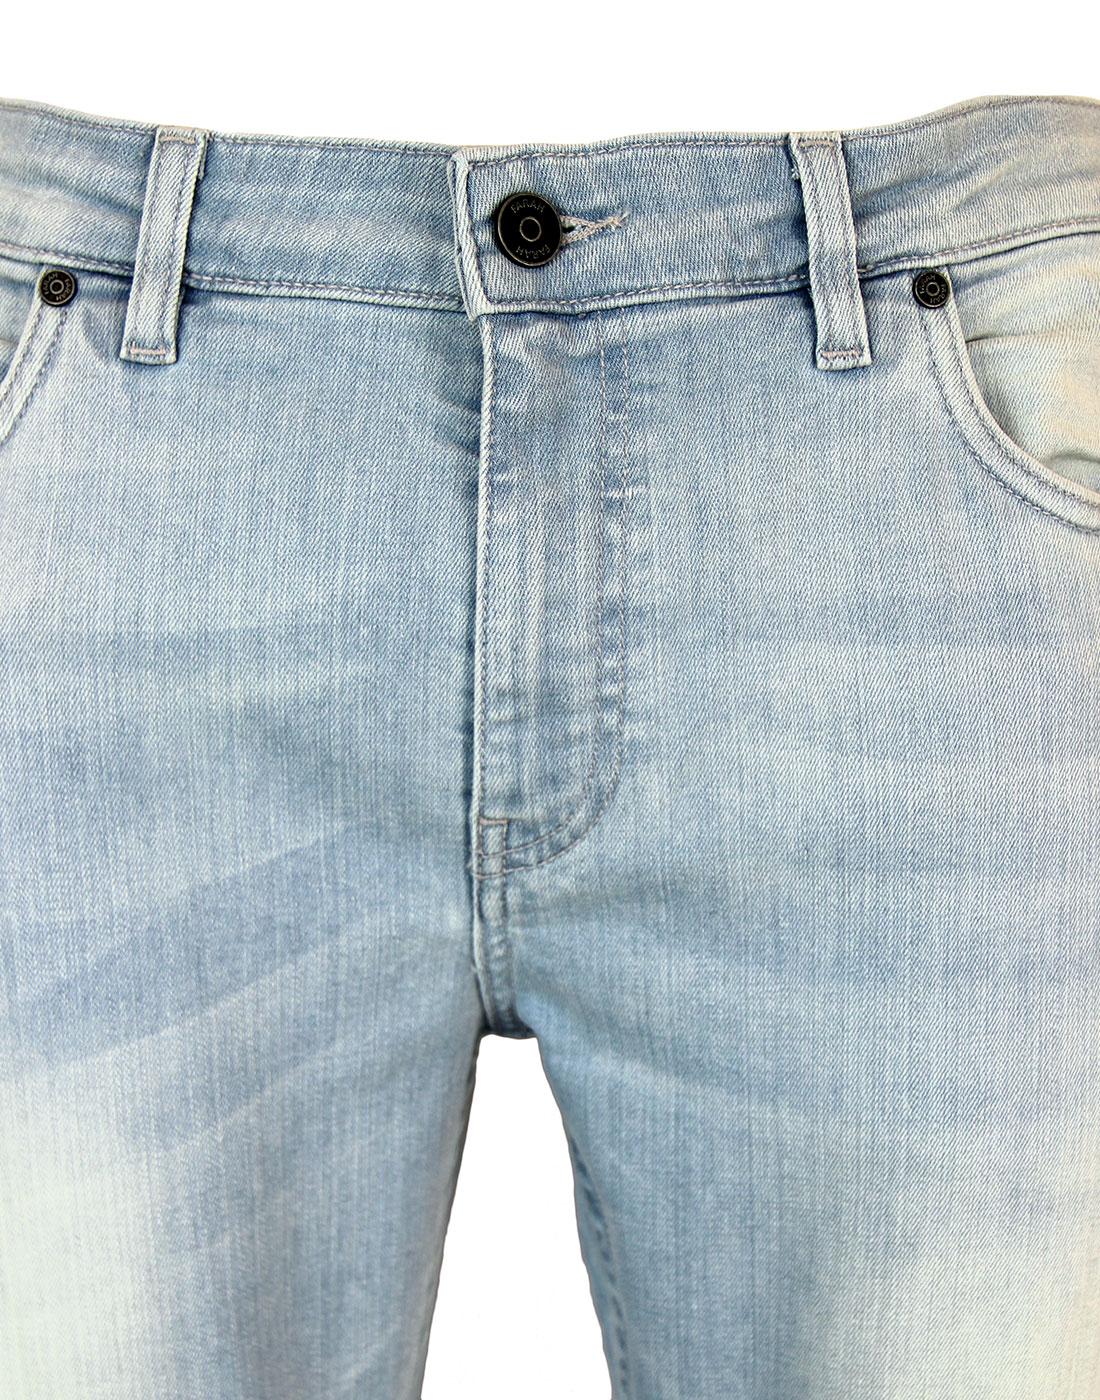 FARAH Drake Retro 60s Mod 5 Pocket Drainpipe Denim Jeans